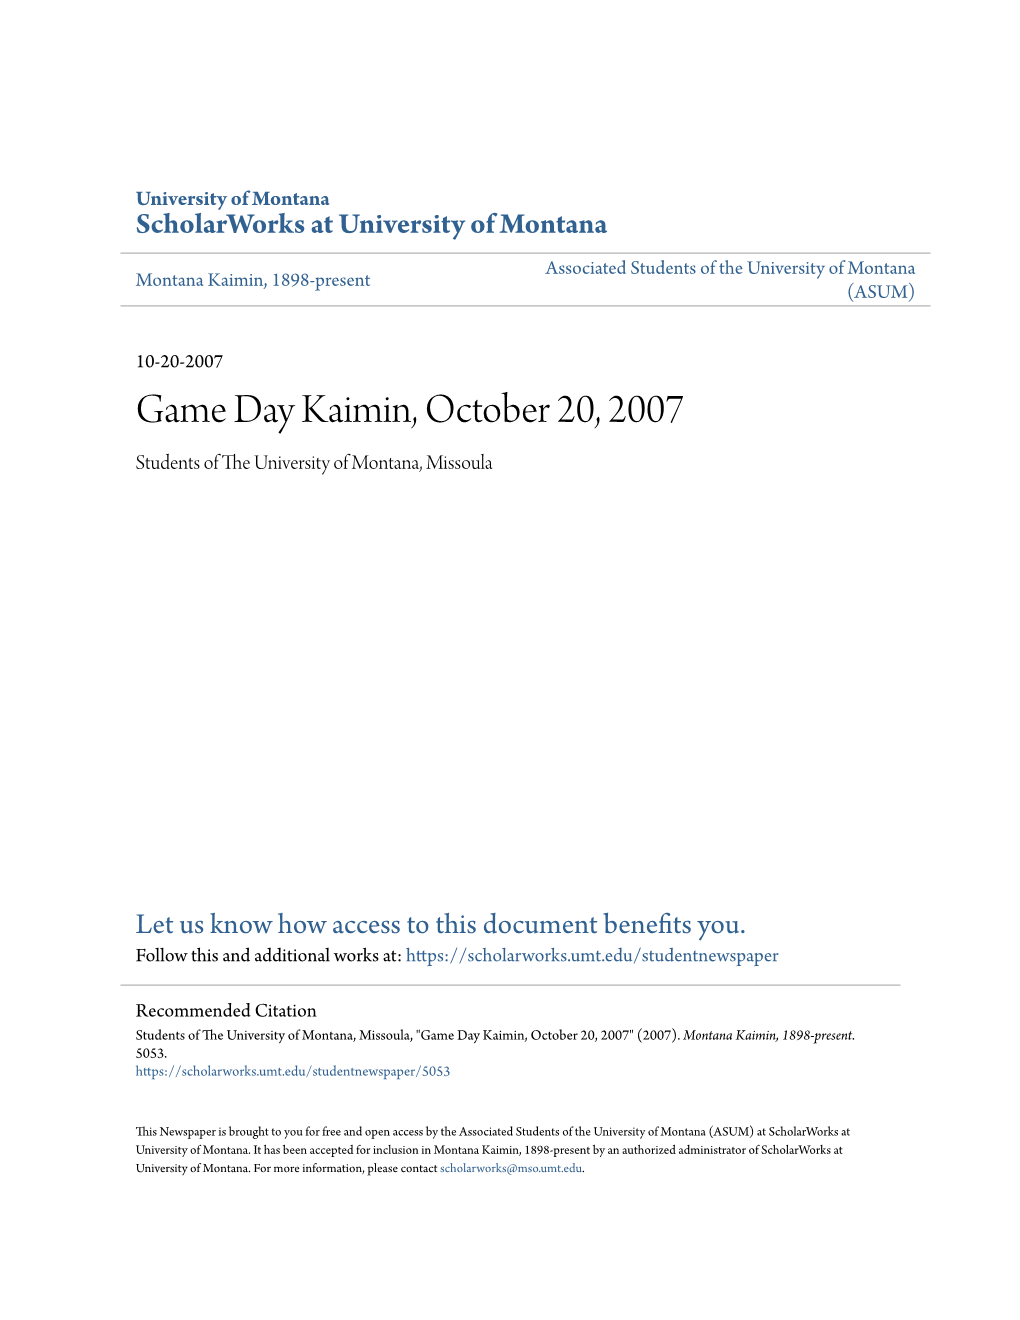 Game Day Kaimin, October 20, 2007 Students of the Niu Versity of Montana, Missoula